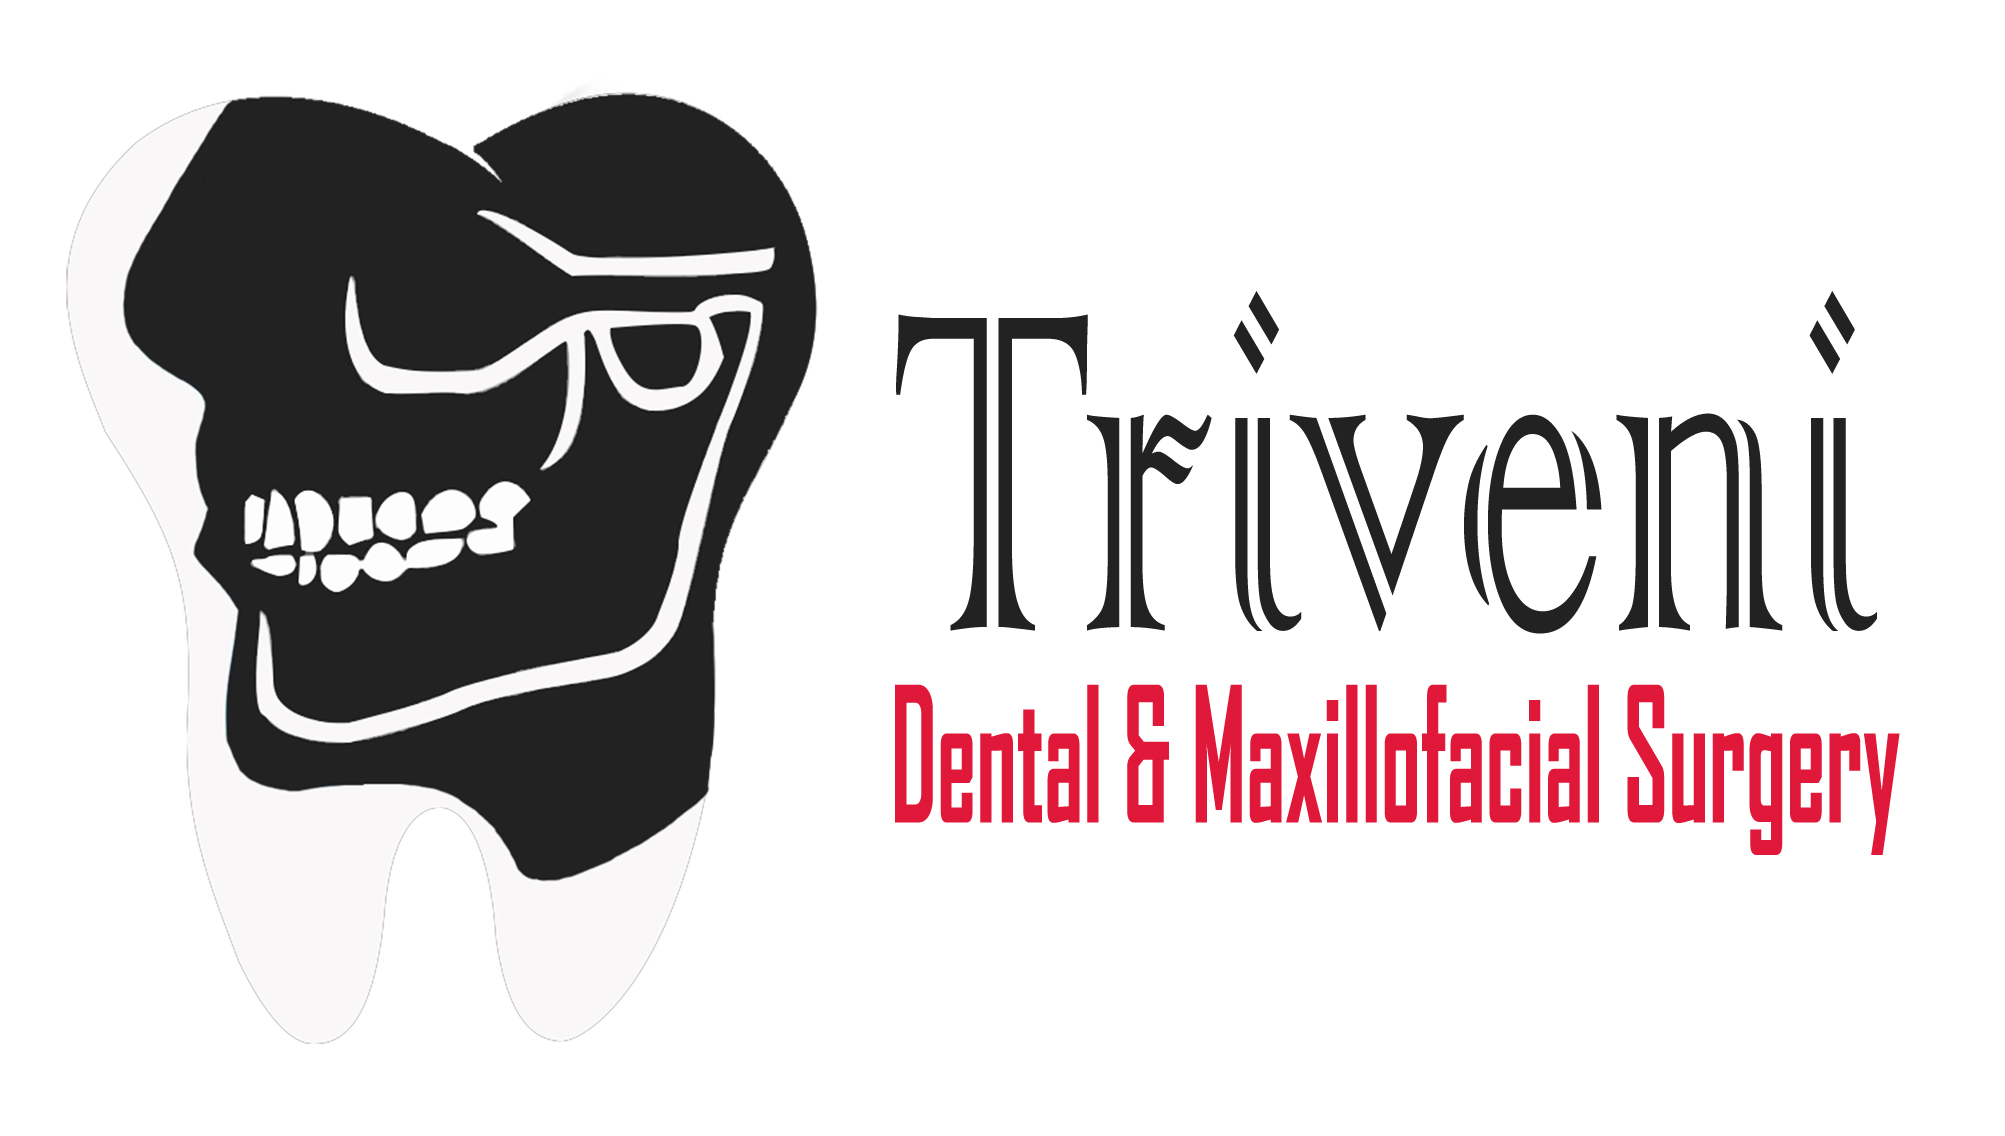 Triveni Dental & Maxillofacial Surgery